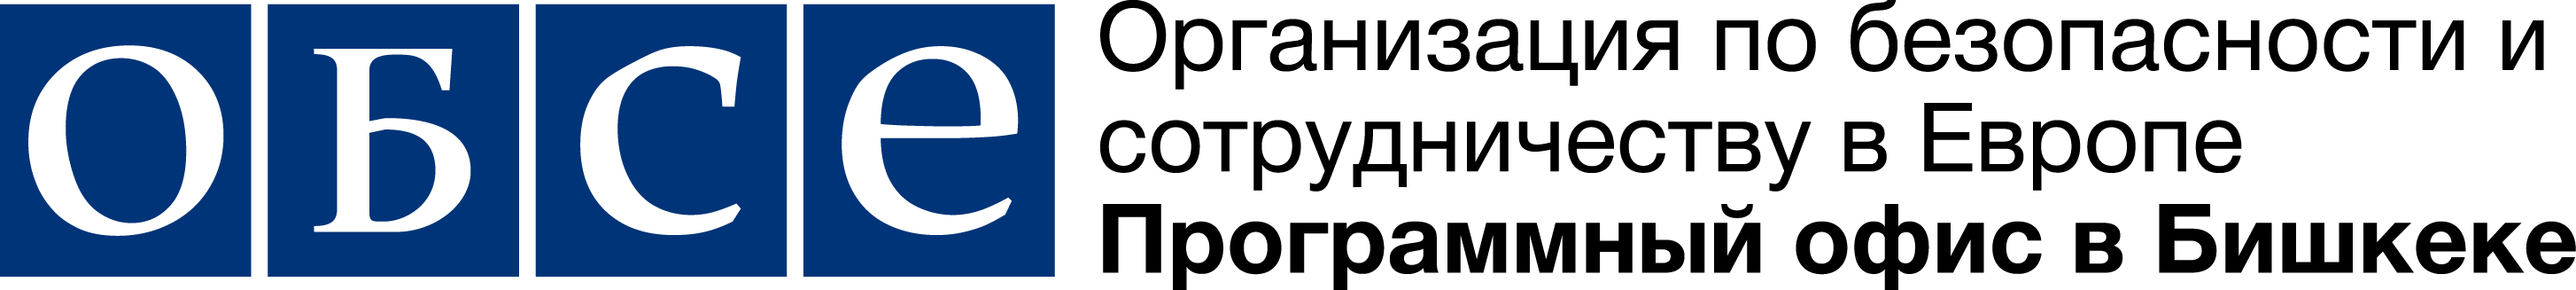 Обсе оон. Организация безопасности и сотрудничеству в Европе. ОБСЕ эмблема. Организации по сотрудничеству в Европе. Логотип ОБСЕ В Бишкеке.